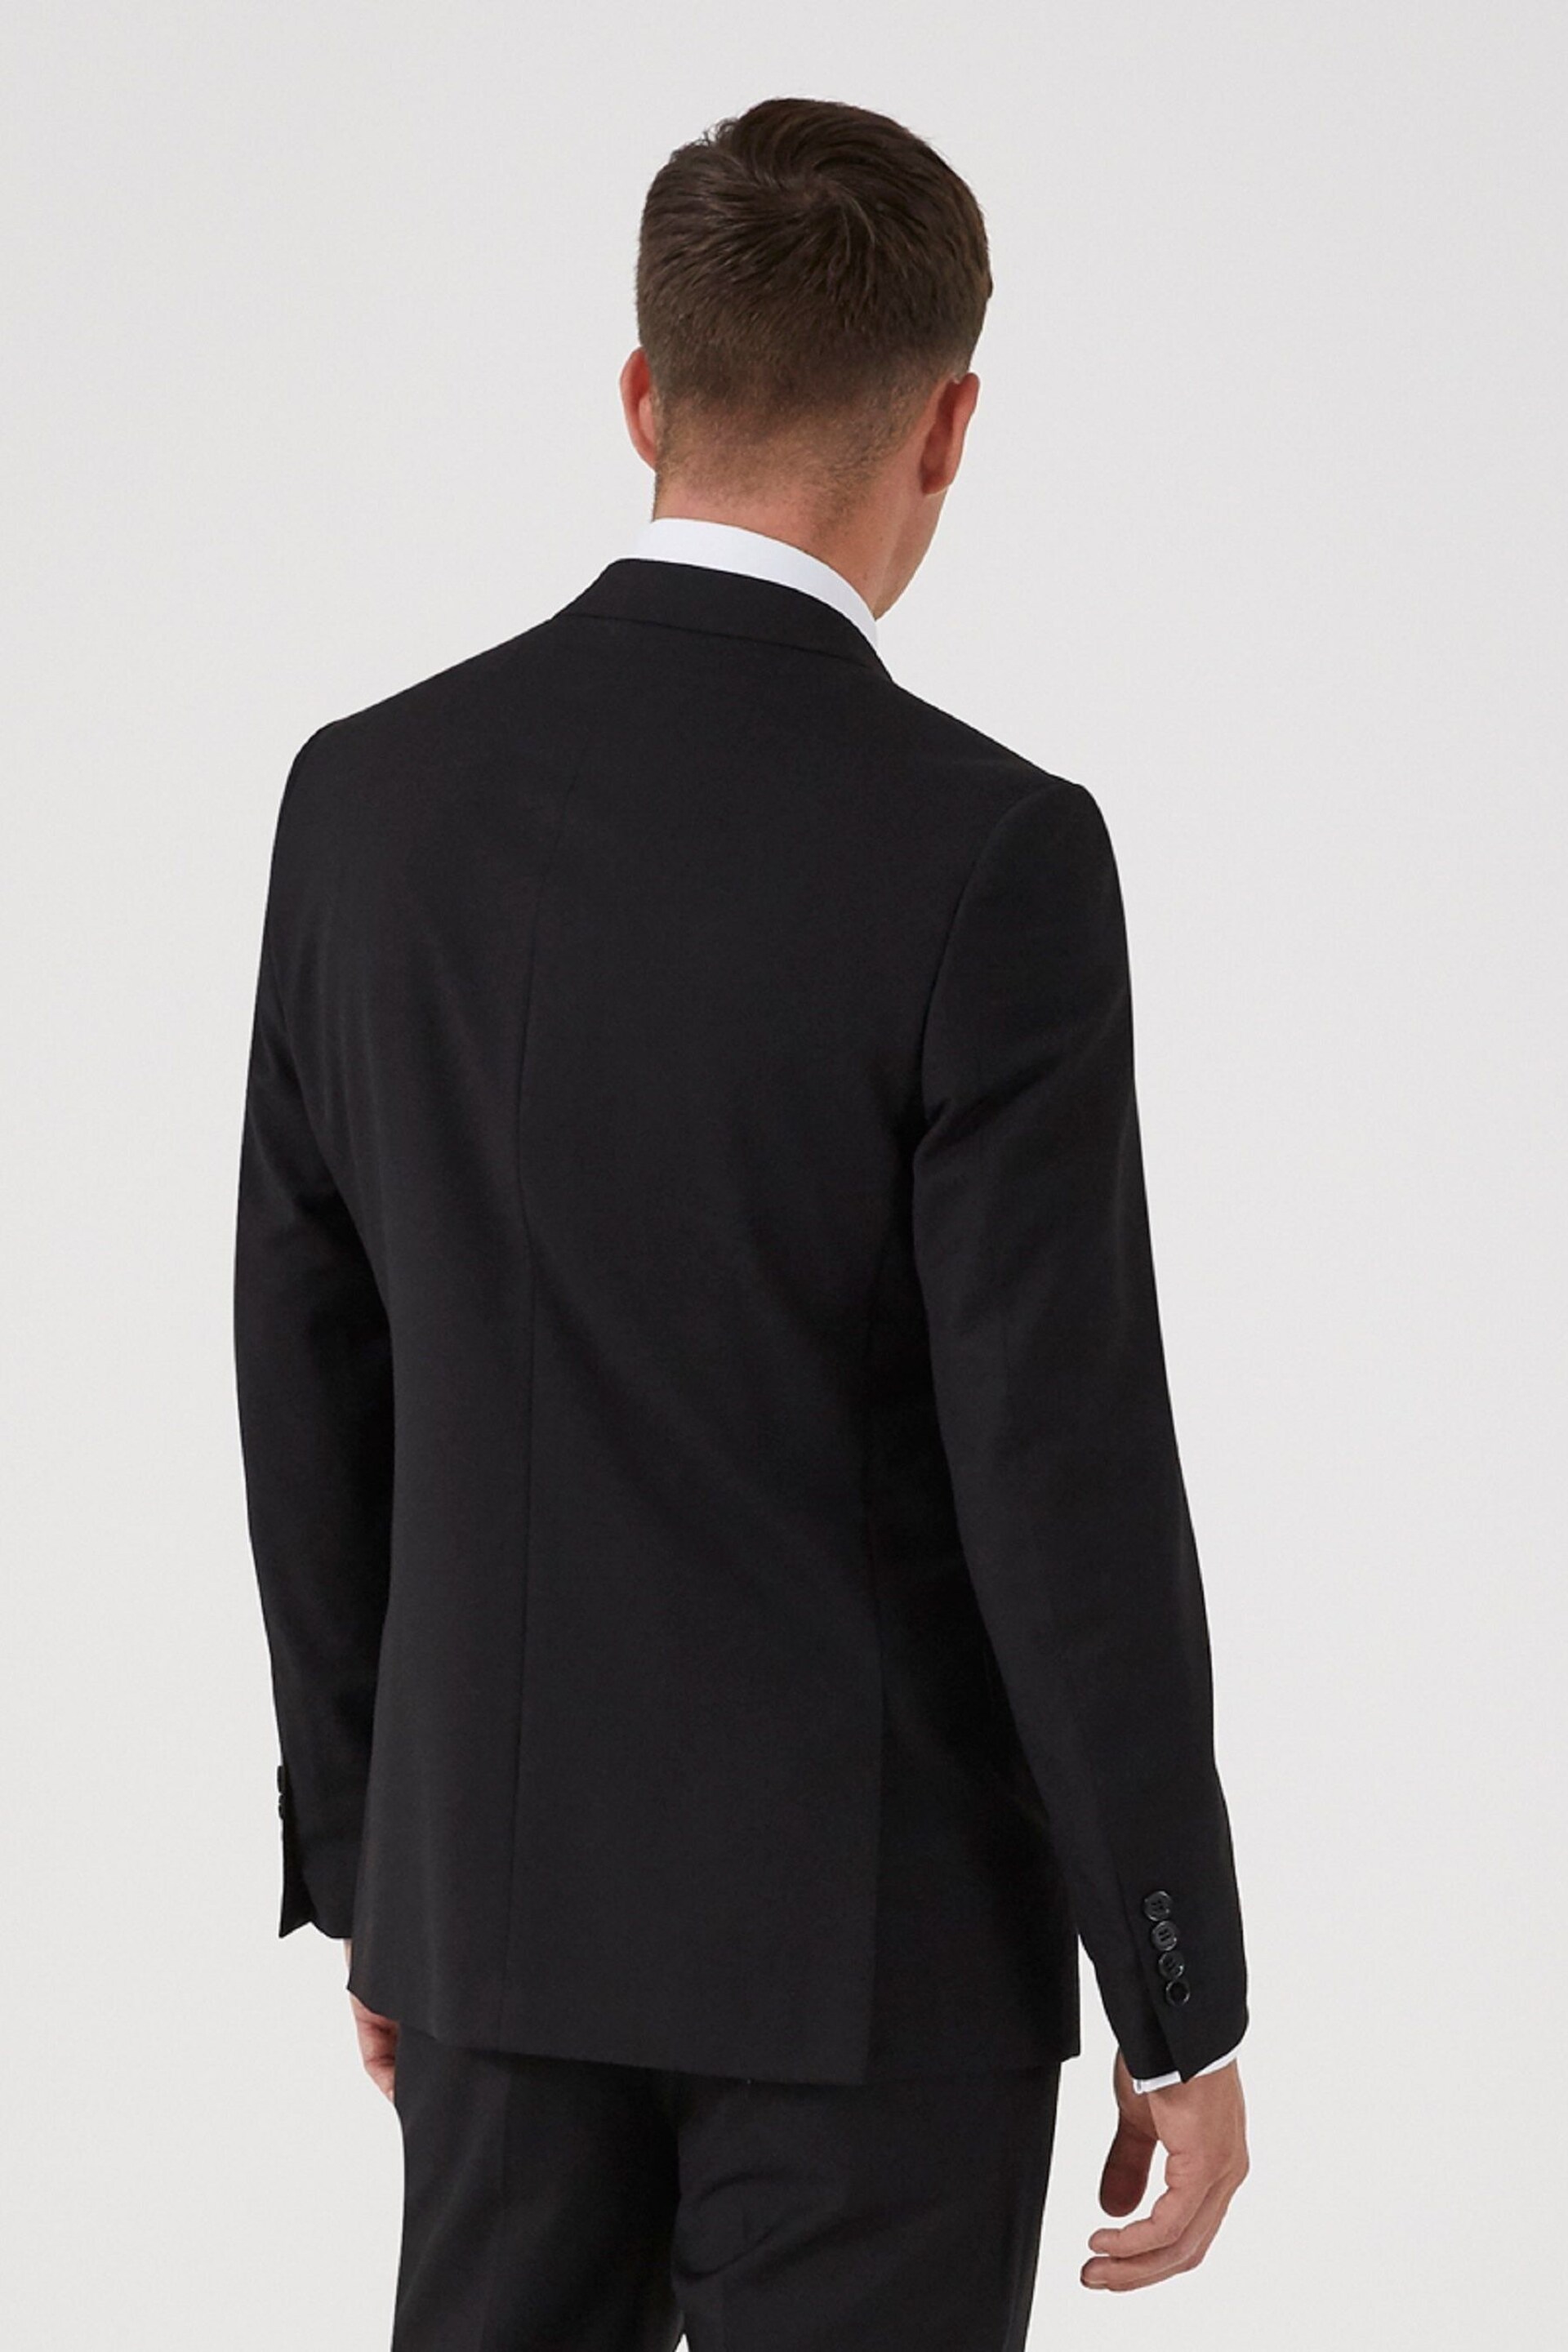 Skopes Milan Black Slim Fit Suit Jacket - Image 3 of 6